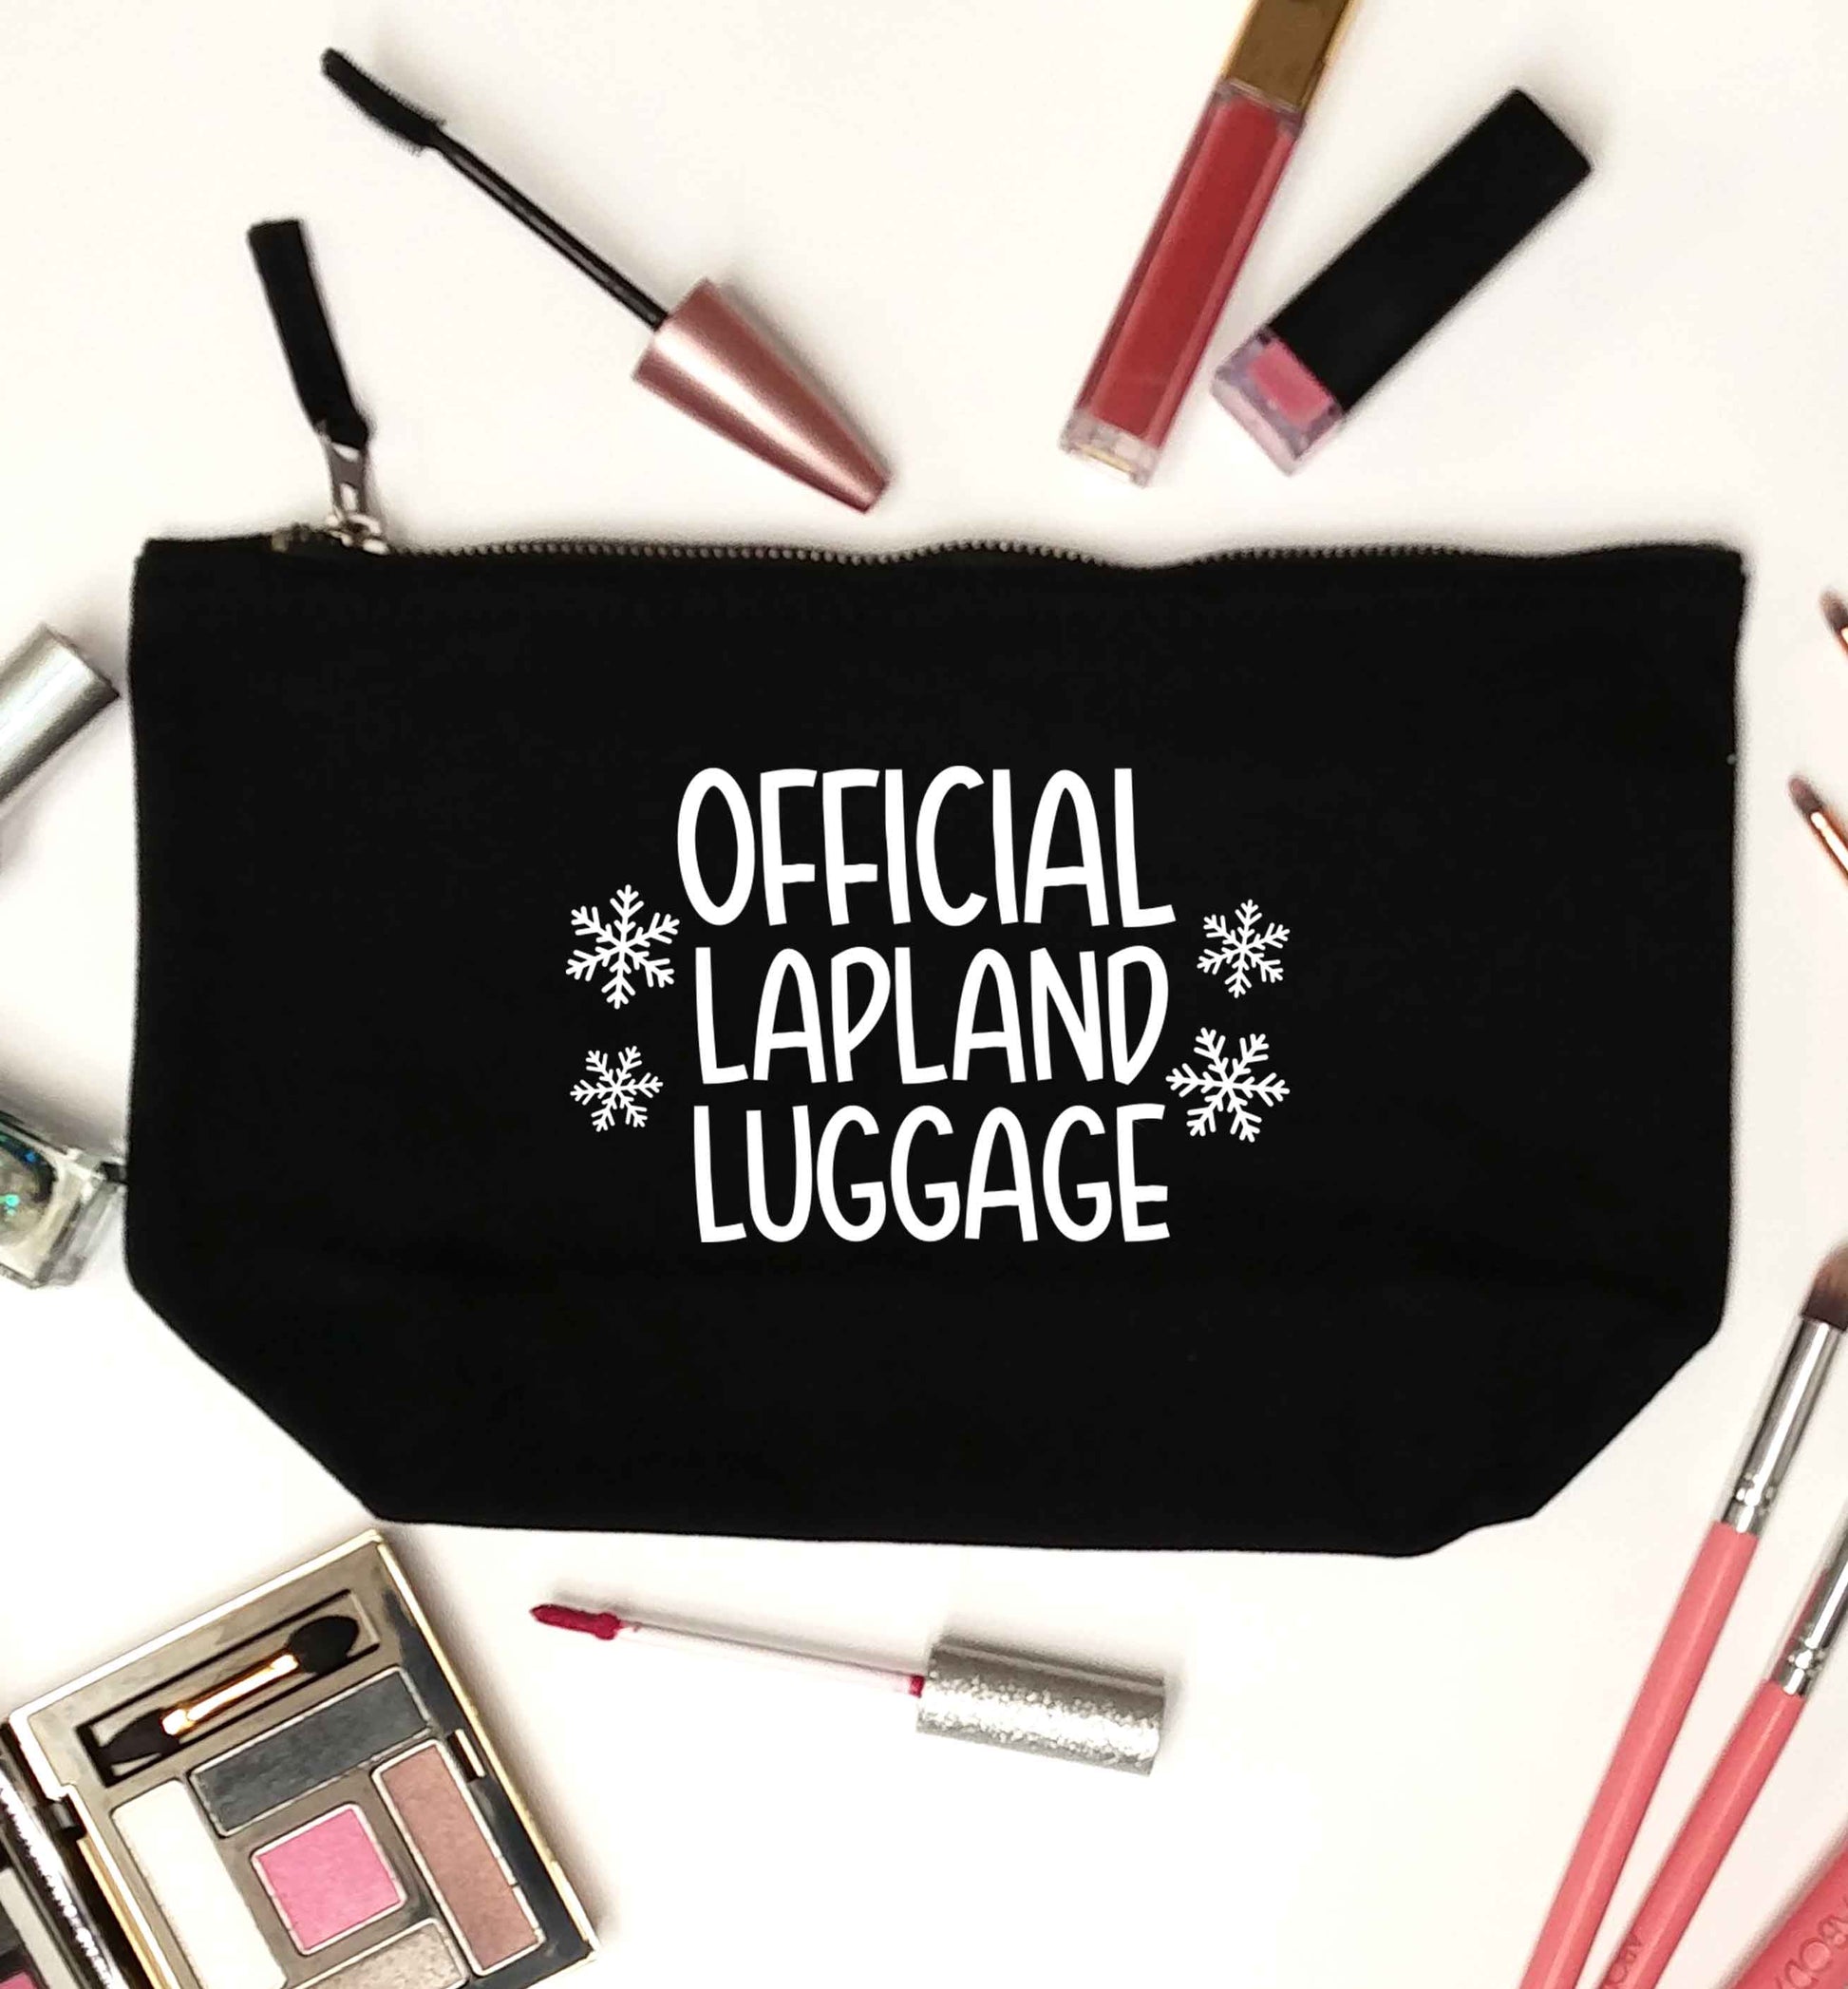 Official Lapland luggage black makeup bag